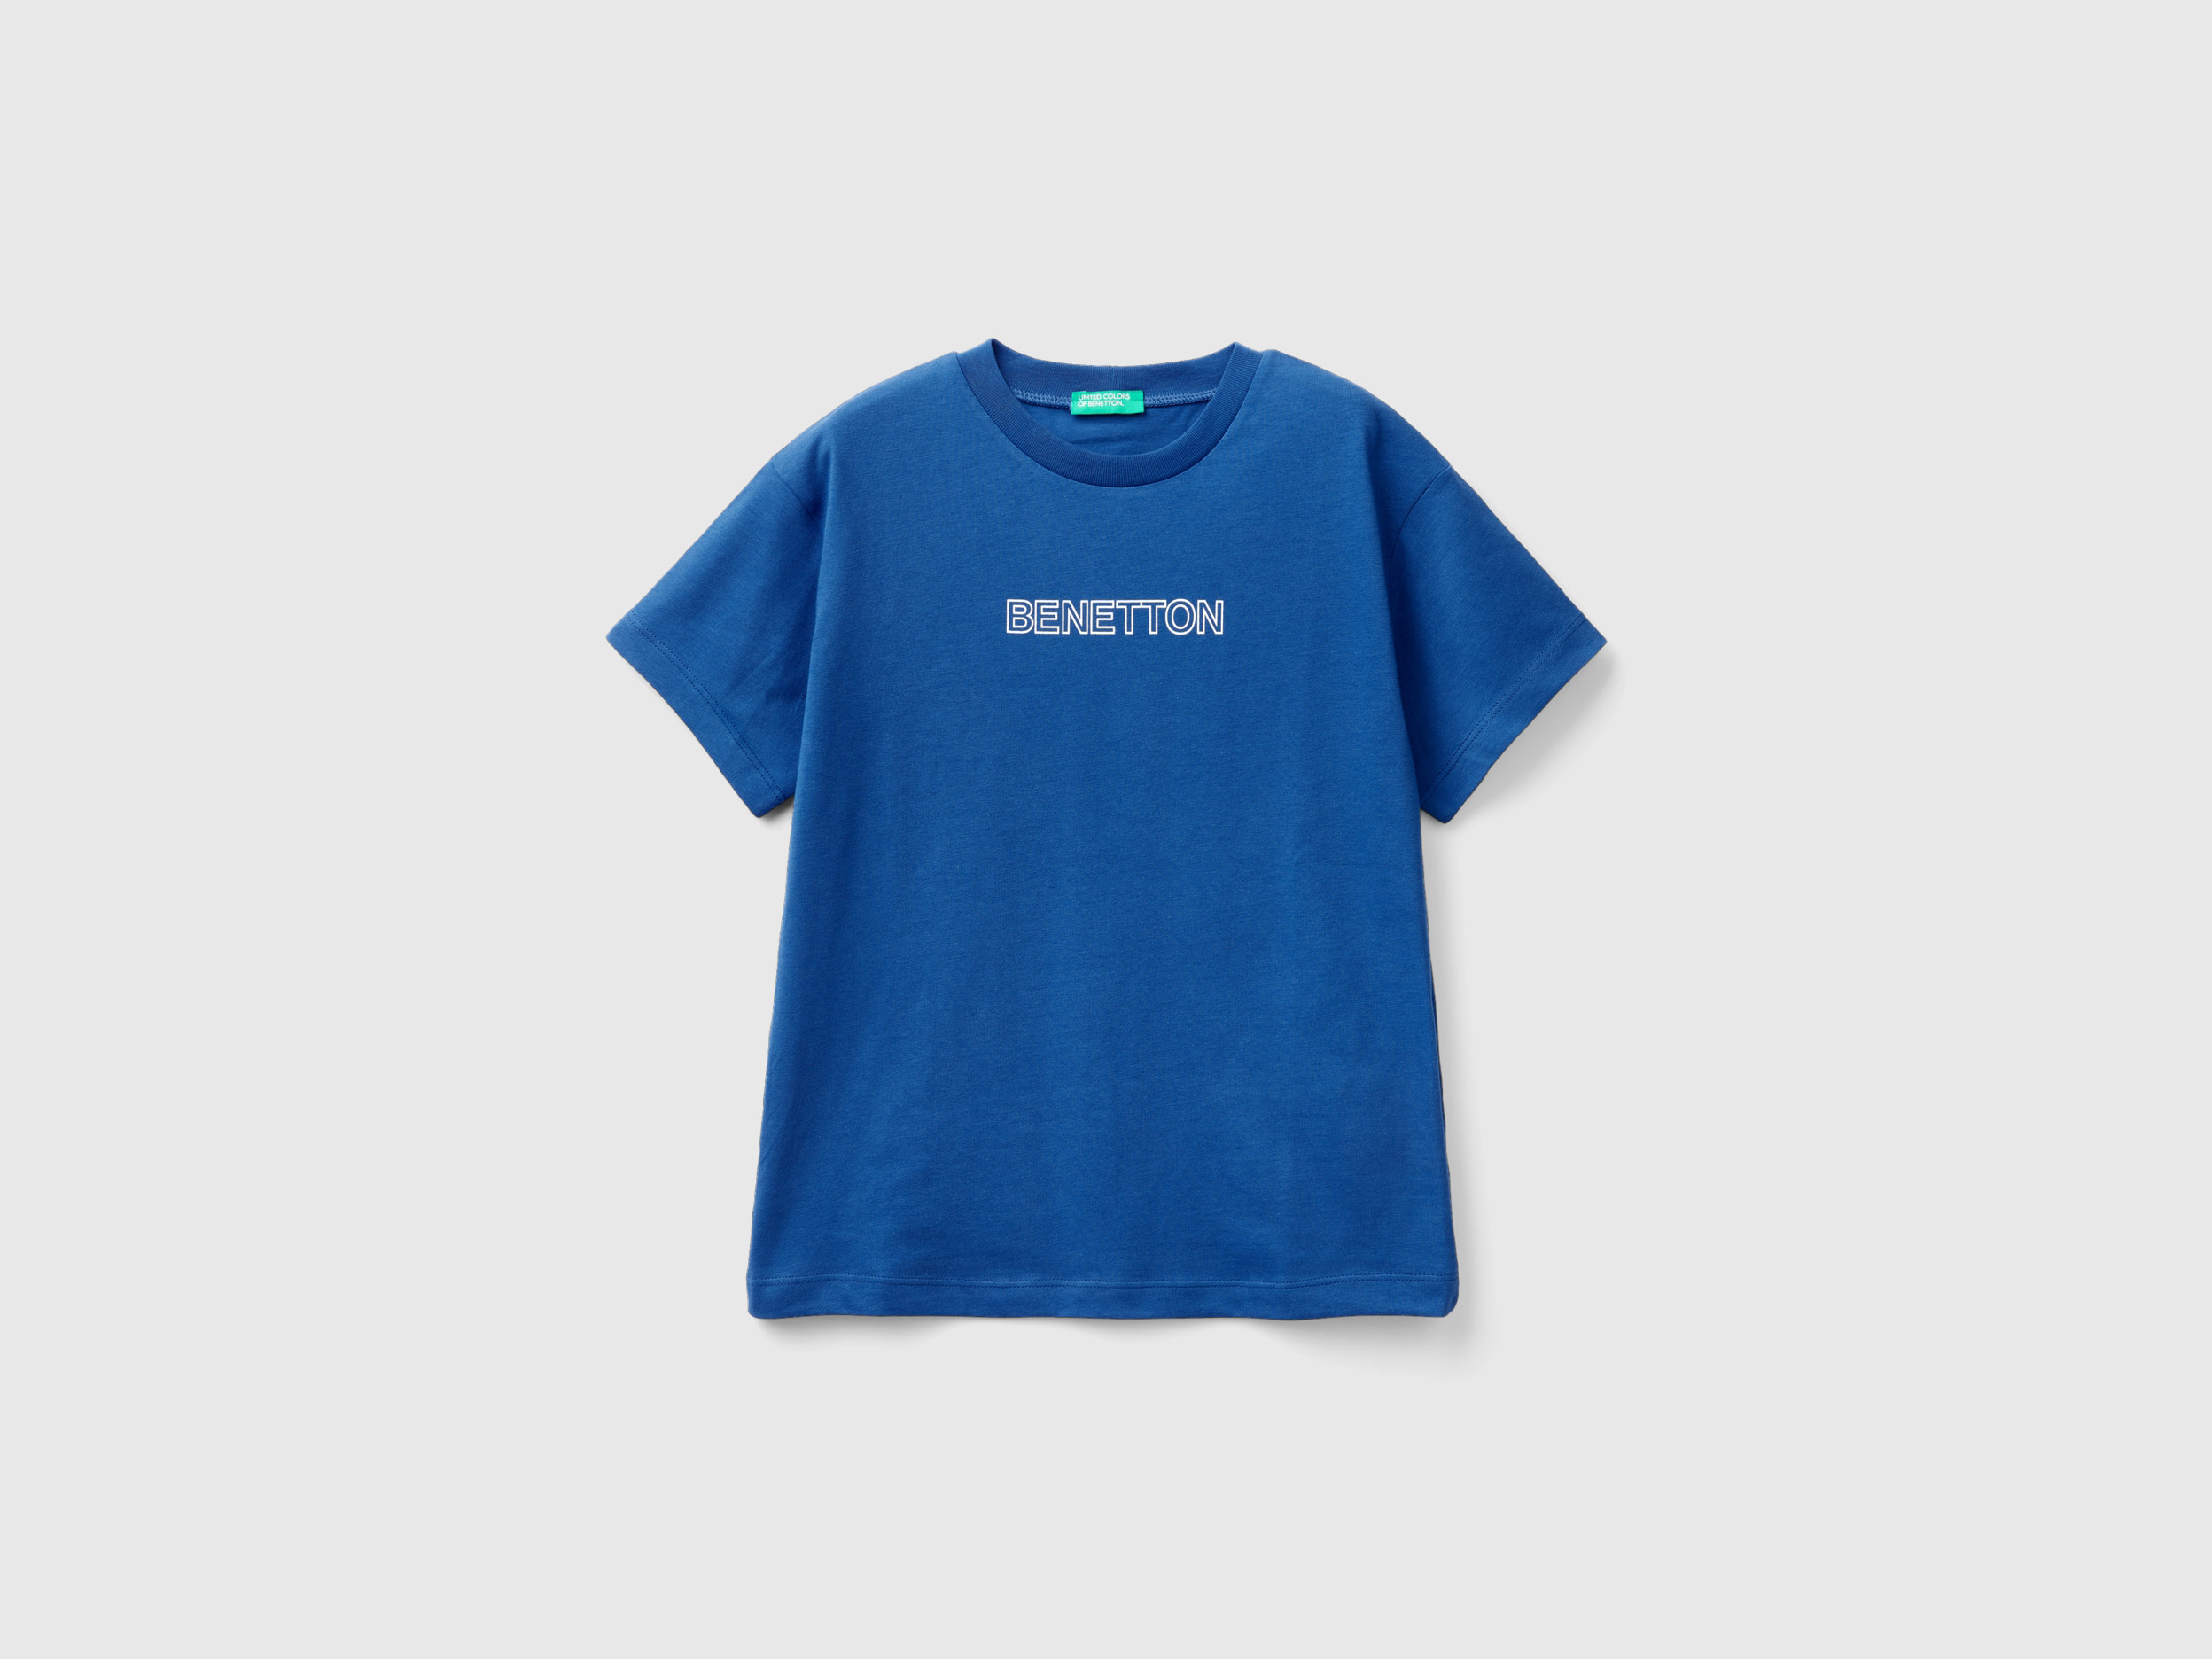 Benetton, 100% Cotton T-shirt With Logo, size M, Bright Blue, Kids